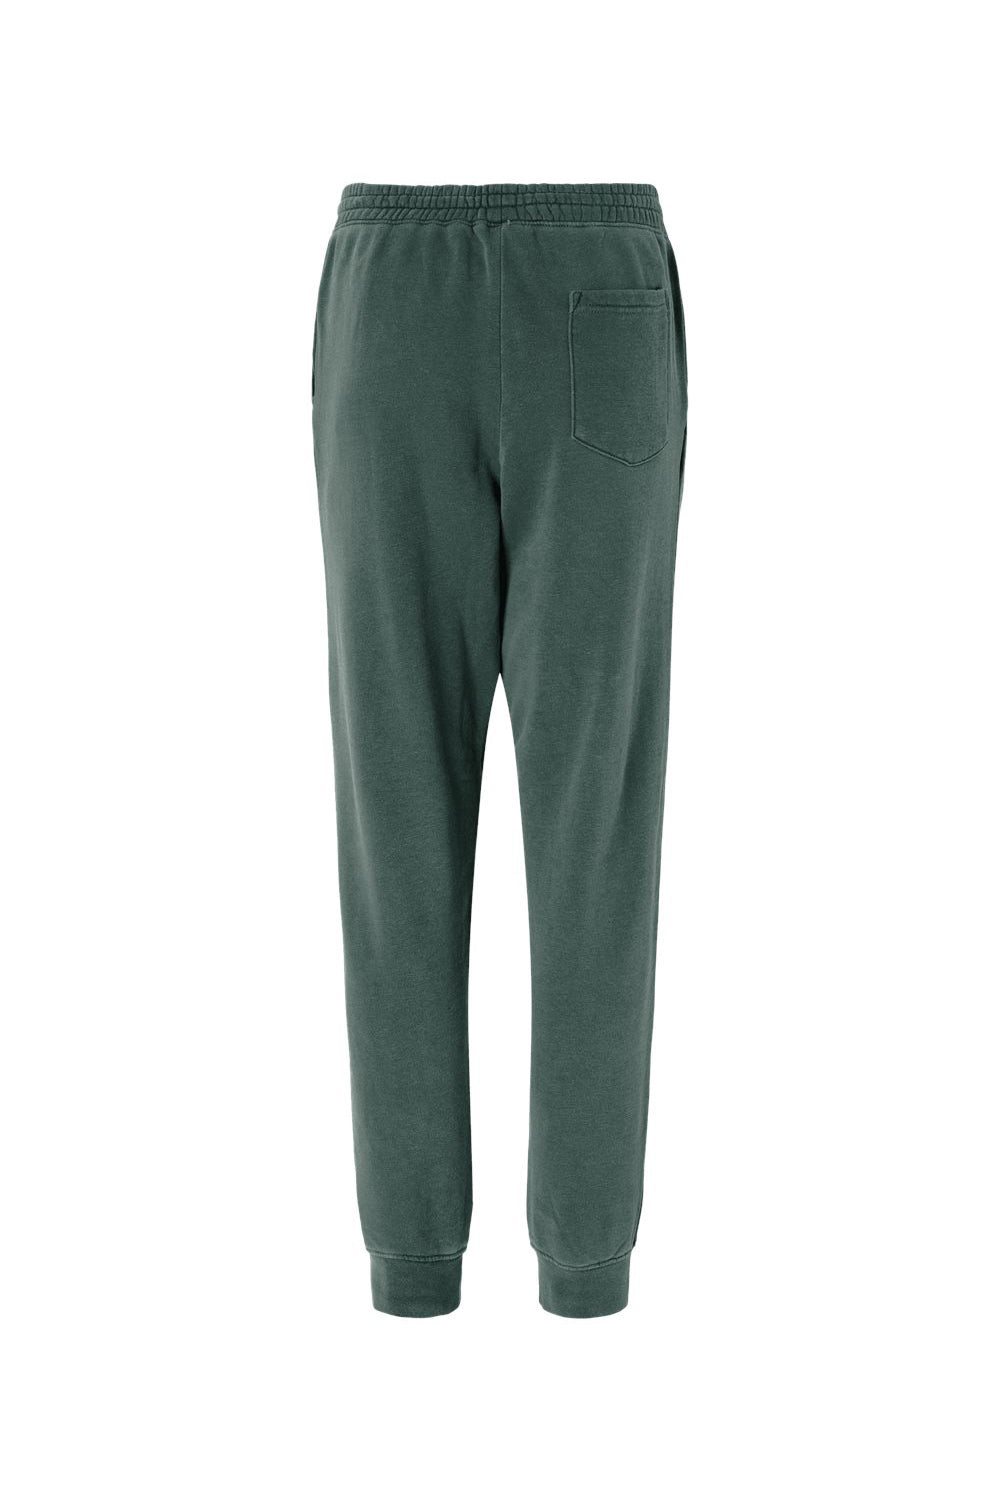 Independent Trading Co. PRM50PTPD Mens Pigment Dyed Fleece Sweatpants w/ Pockets Alpine Green Flat Back